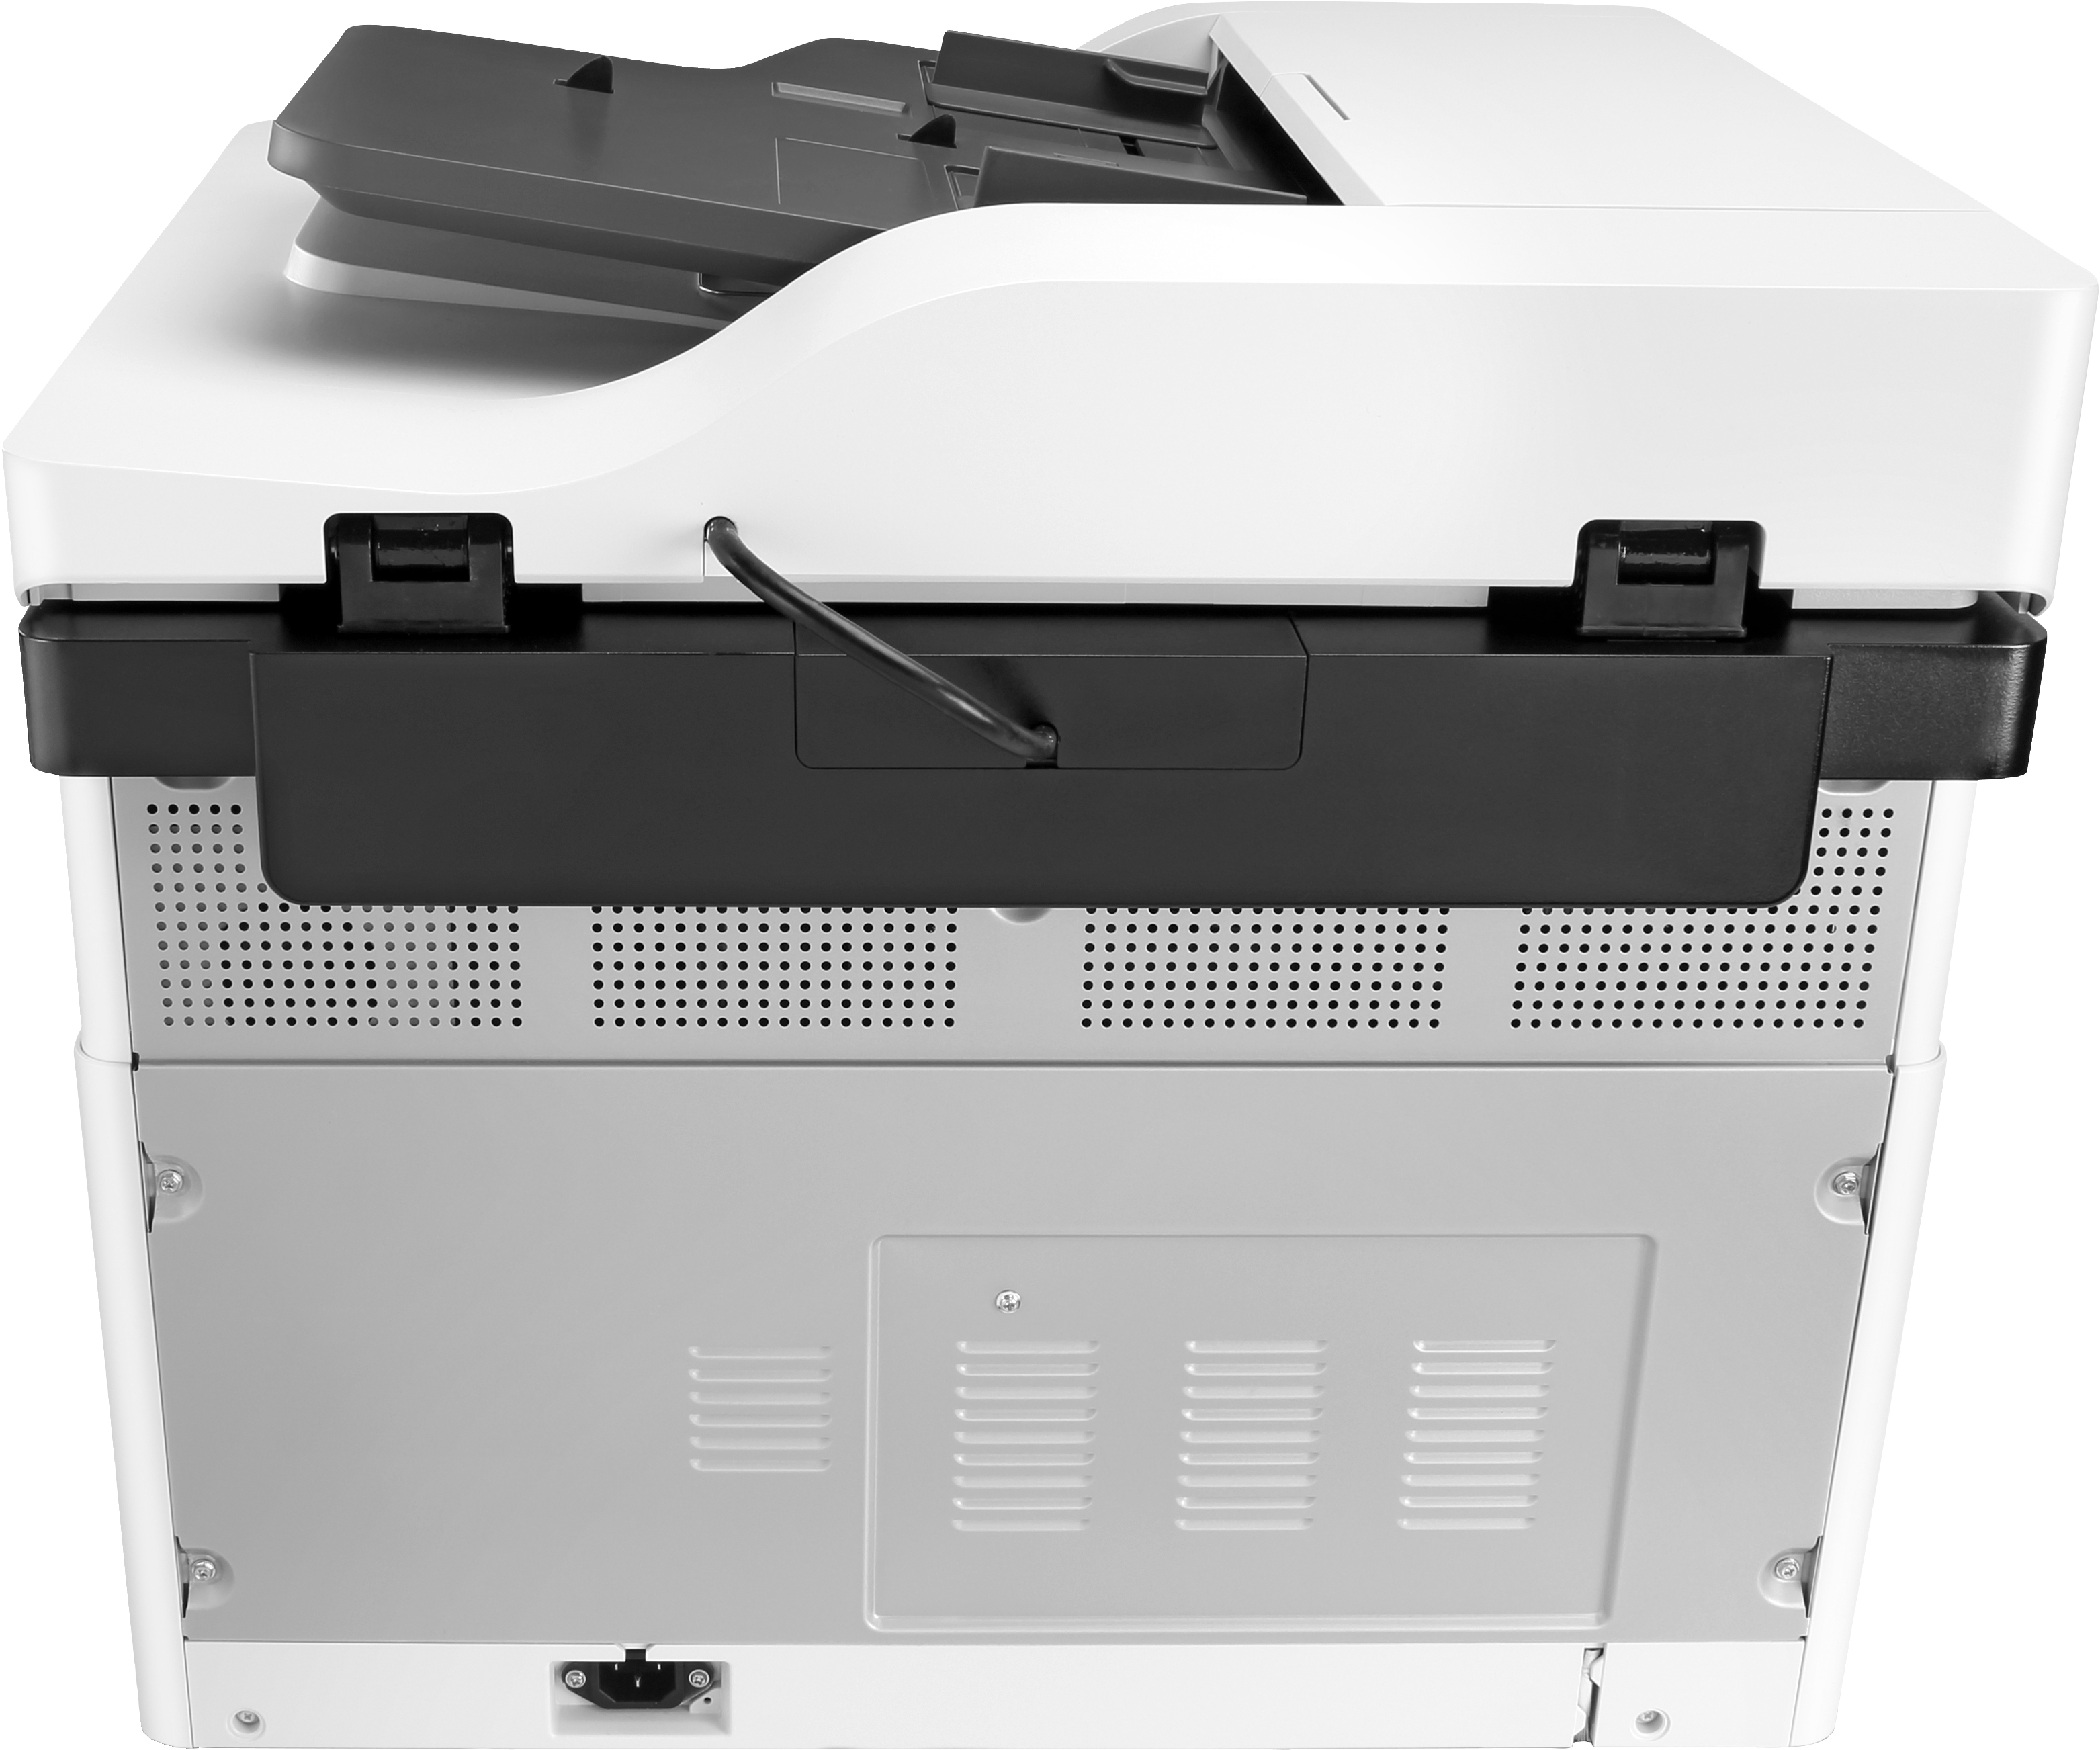 HP LaserJet MFP M443nda - Laser - Monodruck - 1200 x 1200 DPI - Monokopie - A3 - Schwarz - Weiß